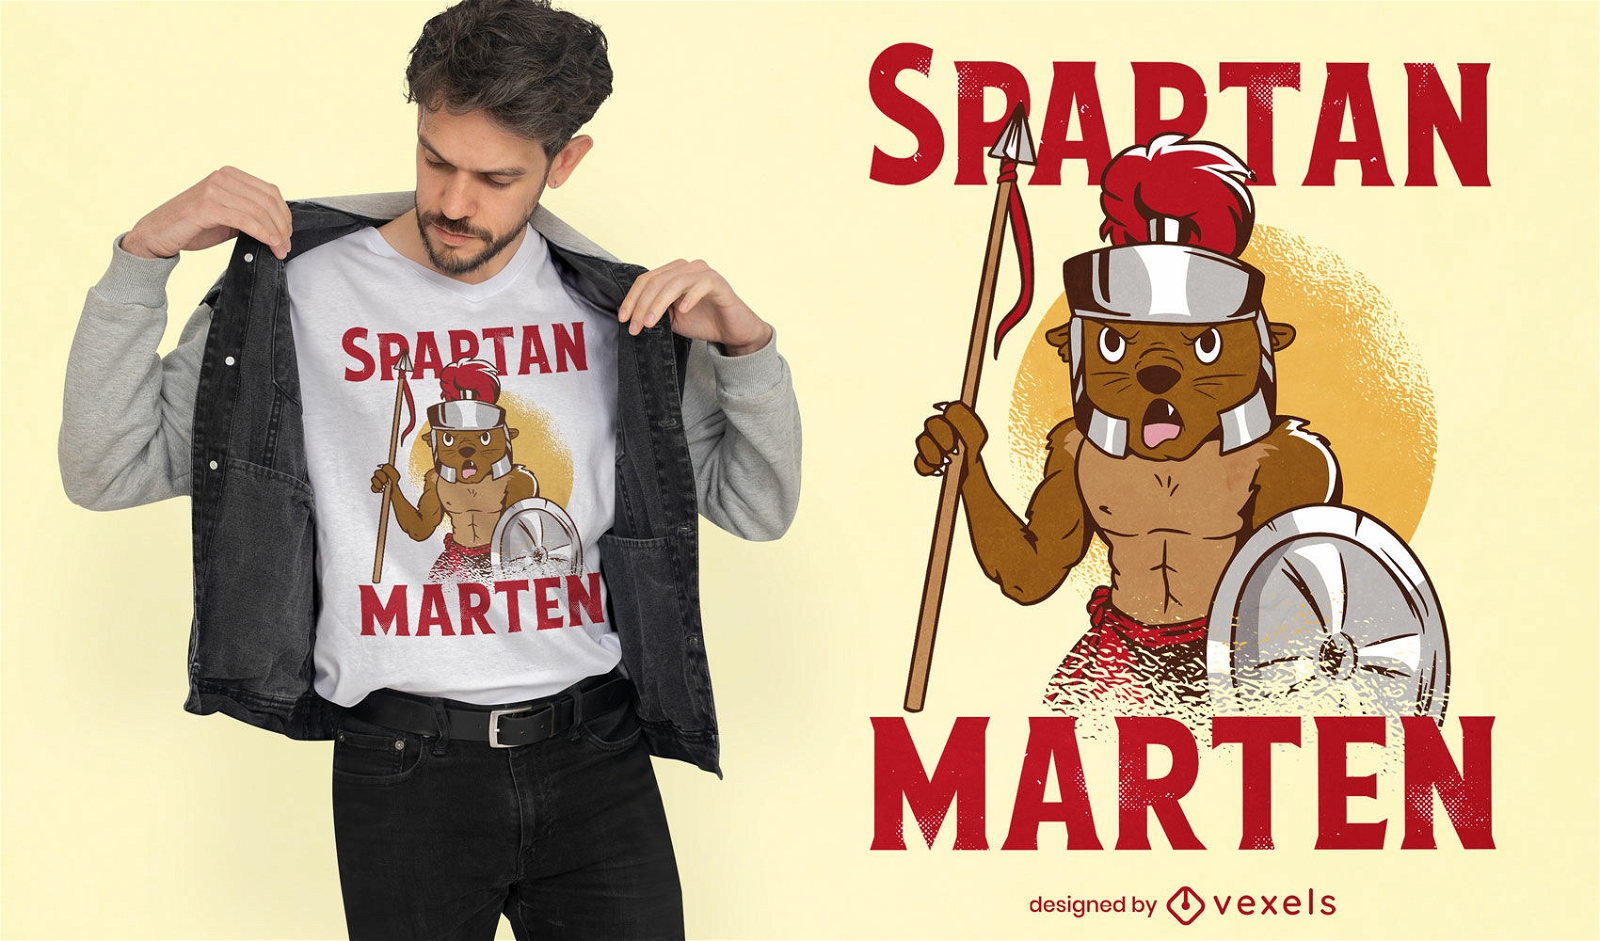 Marten spartan warrior t-shirt design